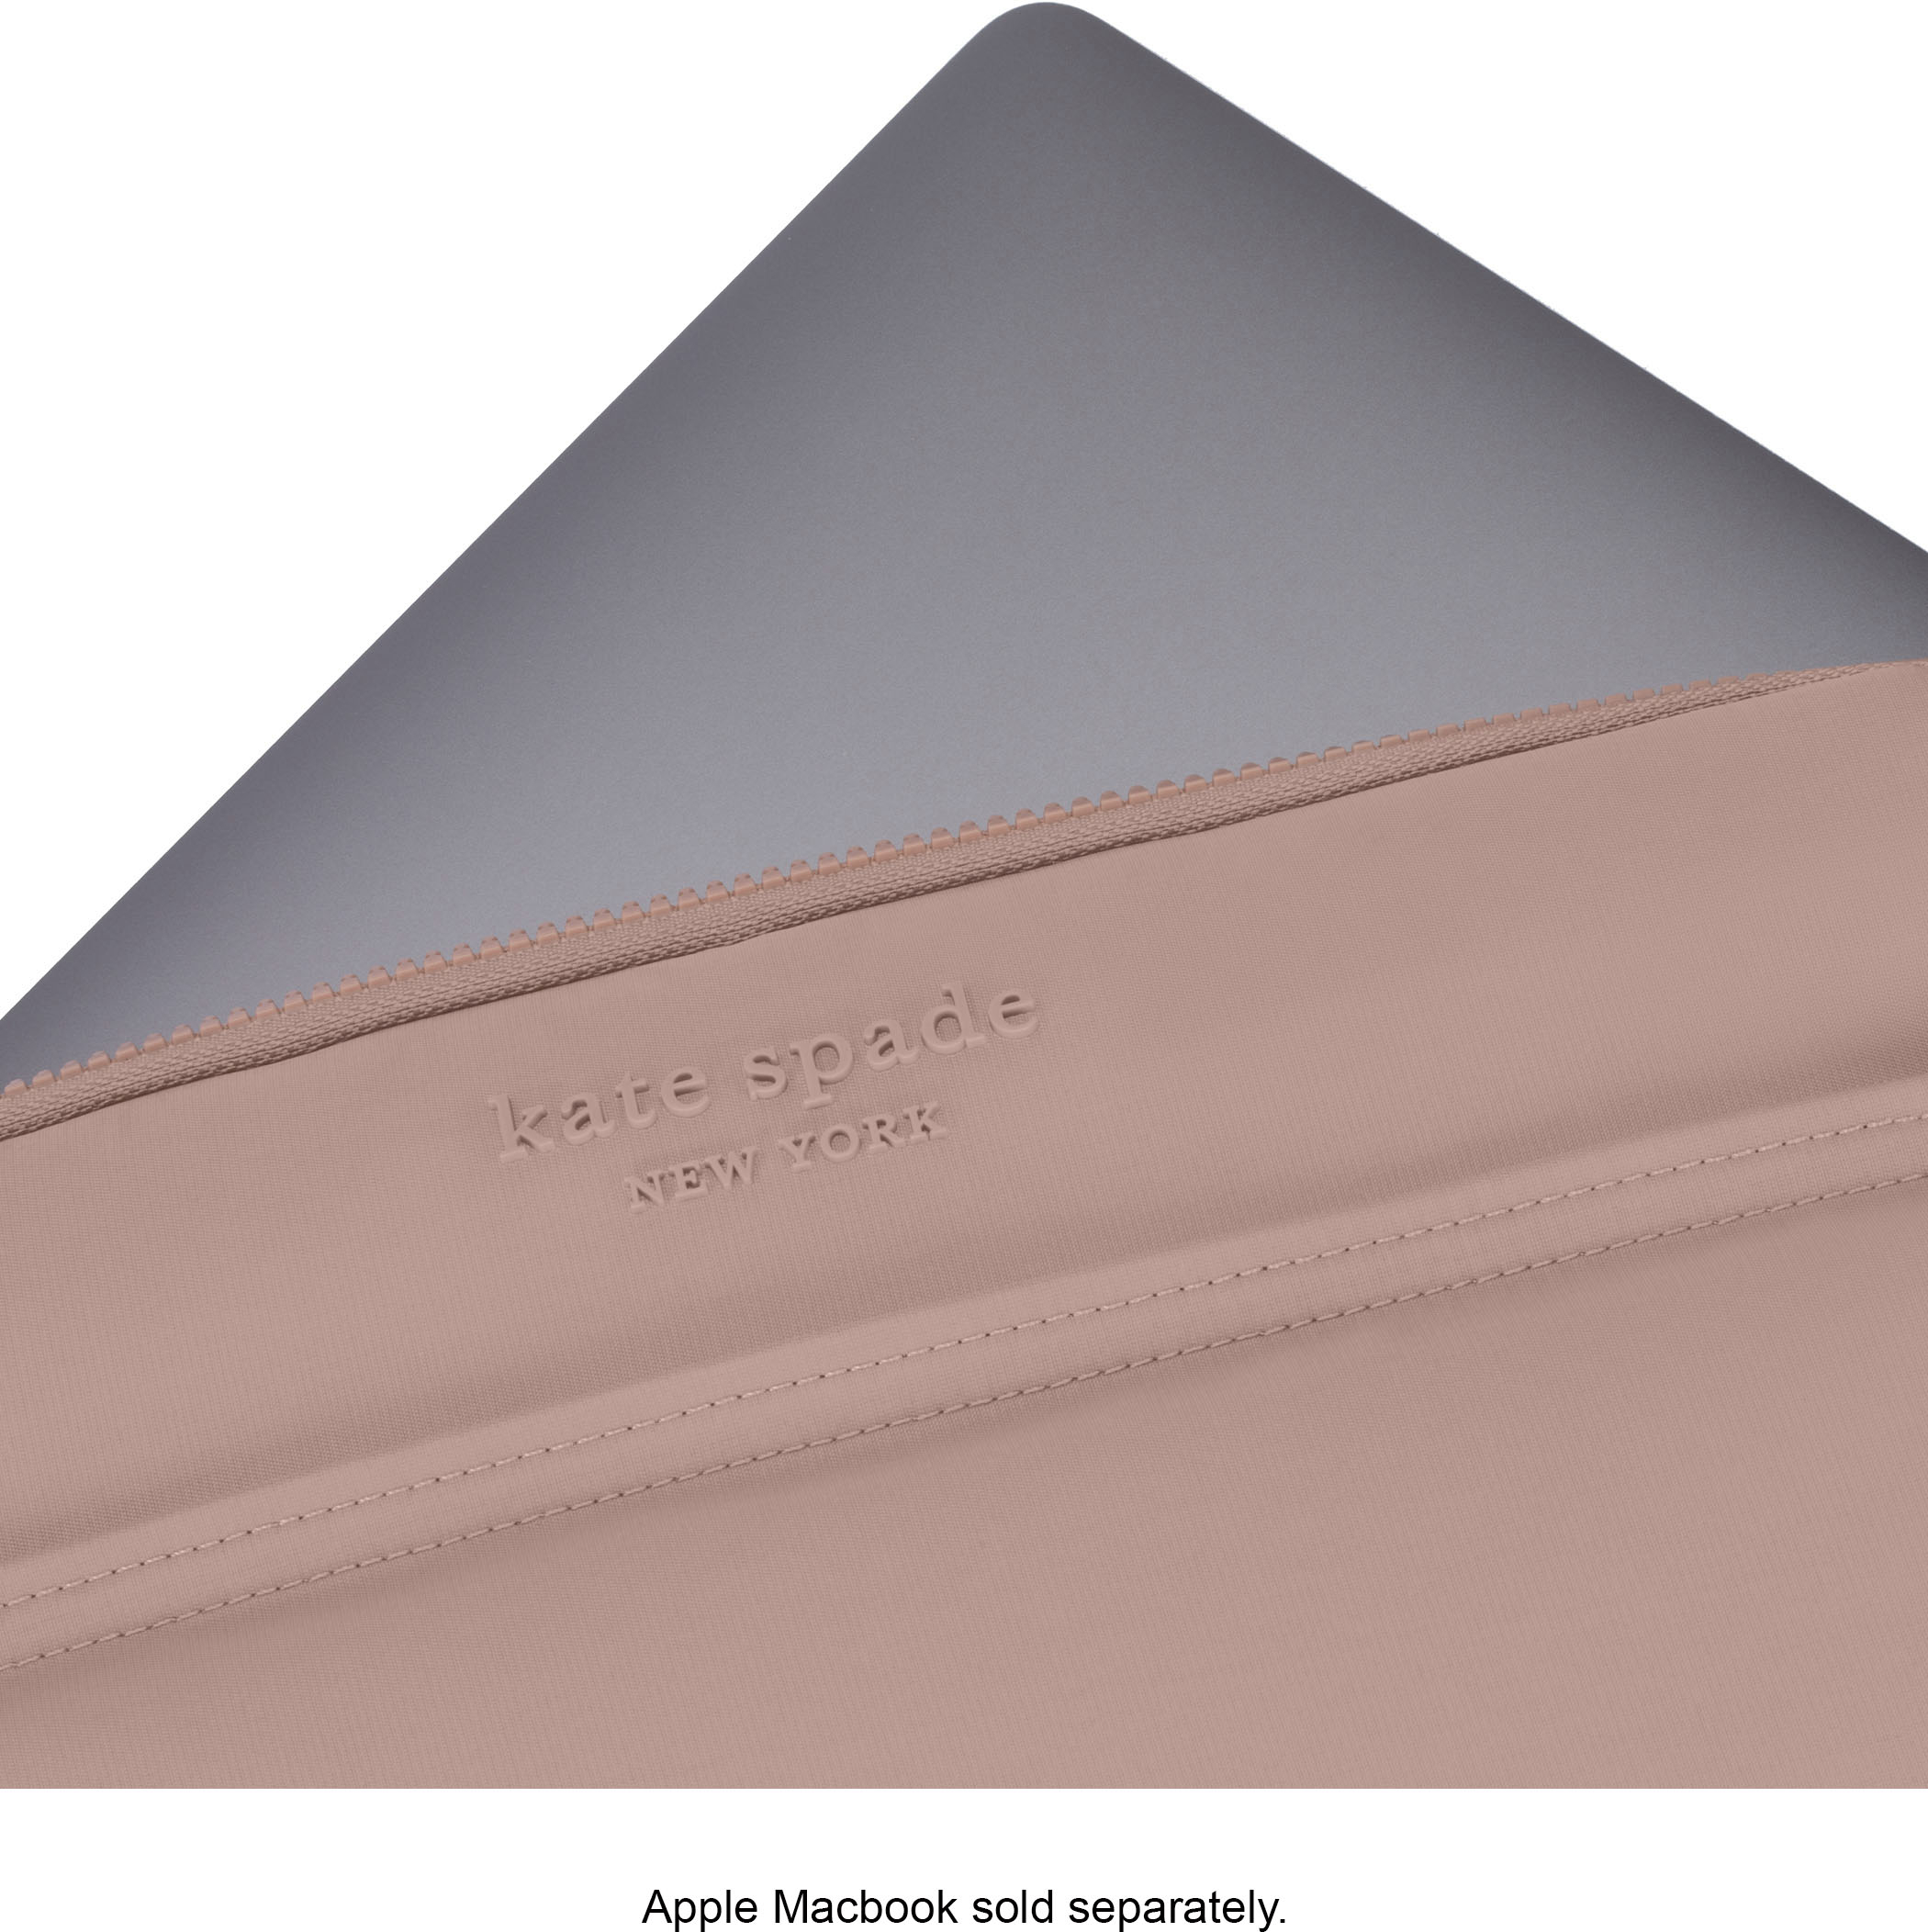 Incipio Kate Spade New York Puffer Universal Laptop Sleeve Up to 16 Laptop Case - Hollyhock Iridescent Black - KSMB-025-HHIRB